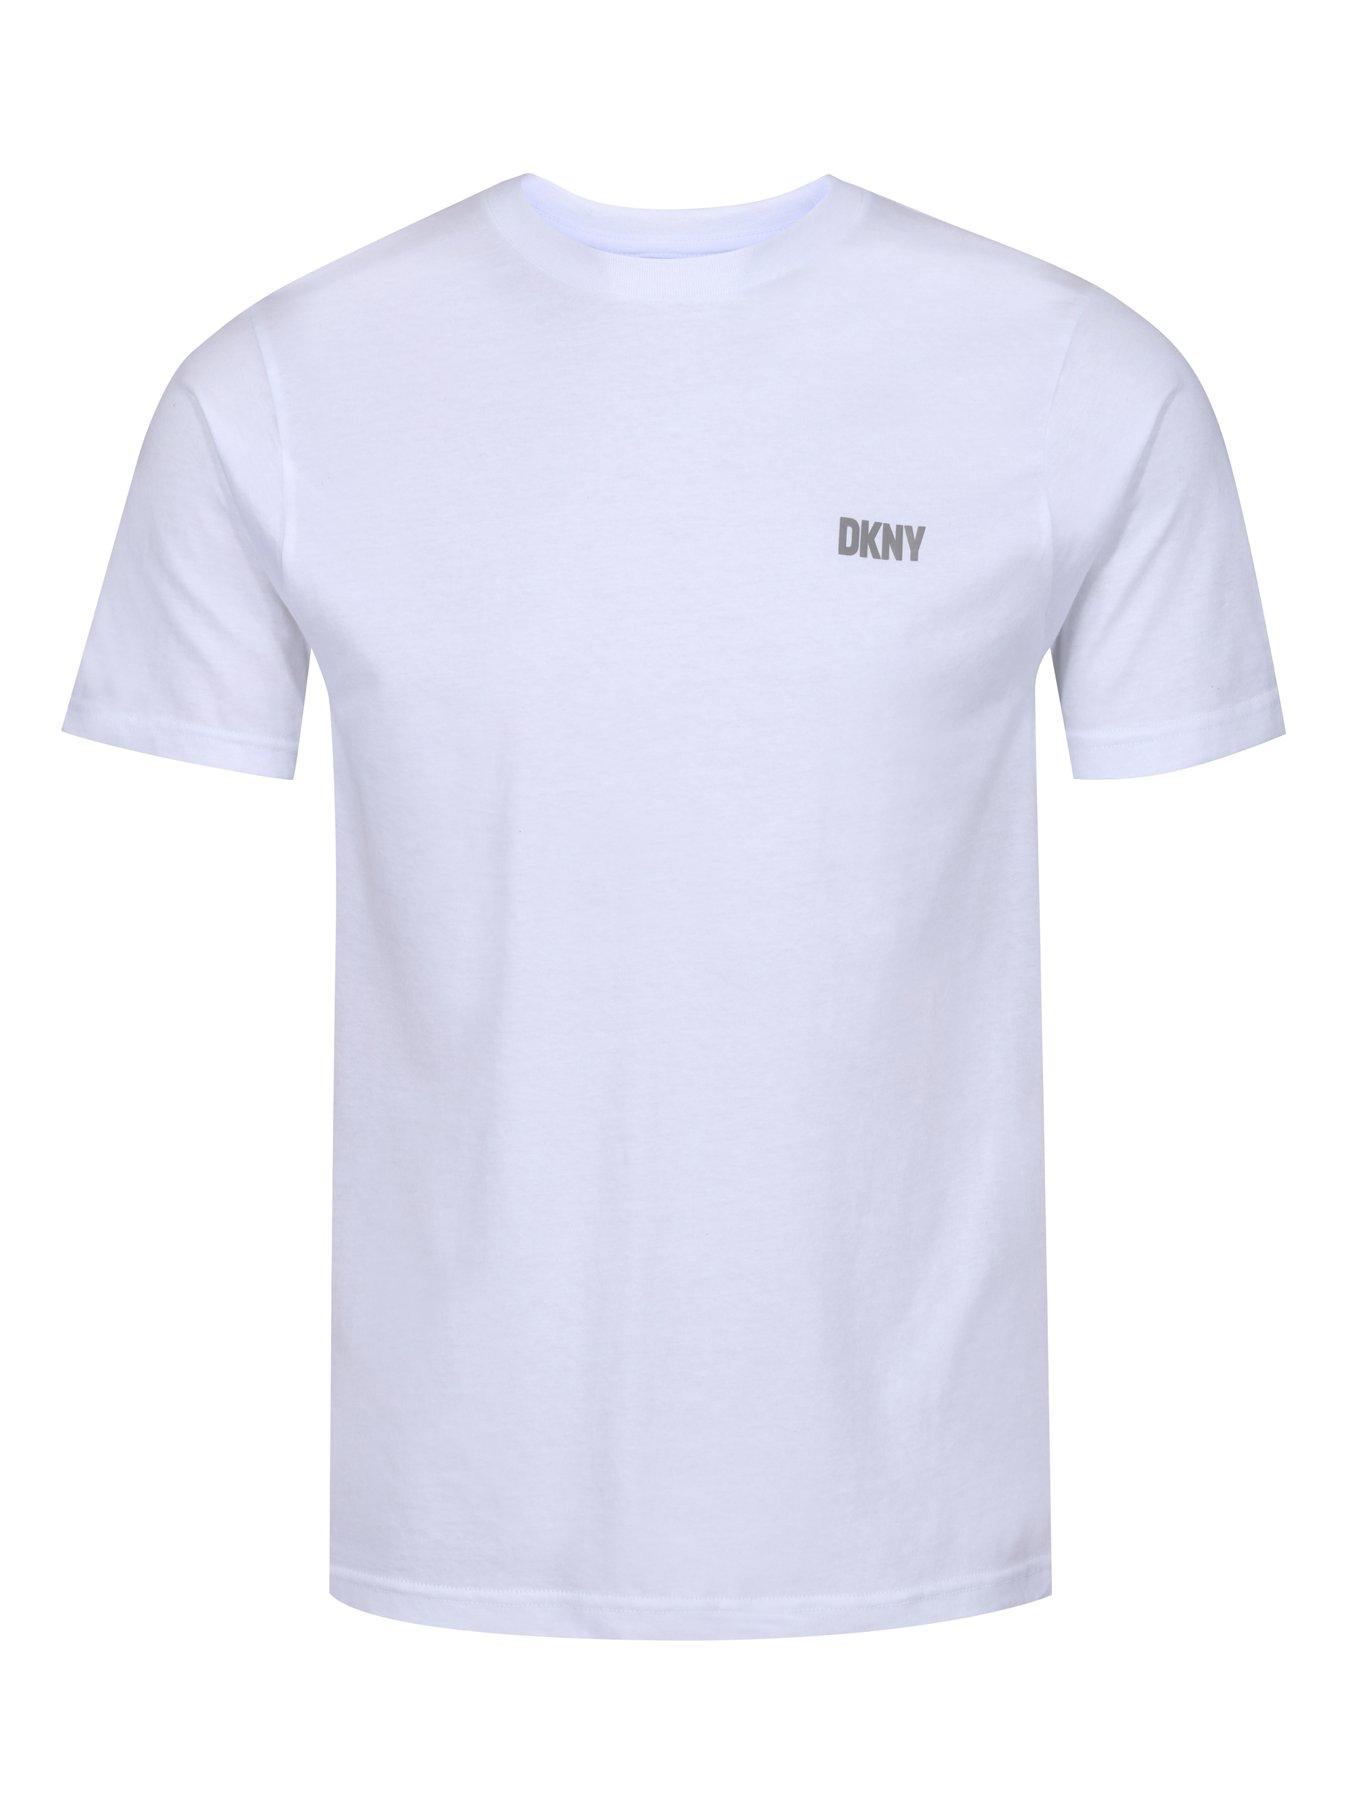 DKNY Giants T-shirt Multi Pack - 3